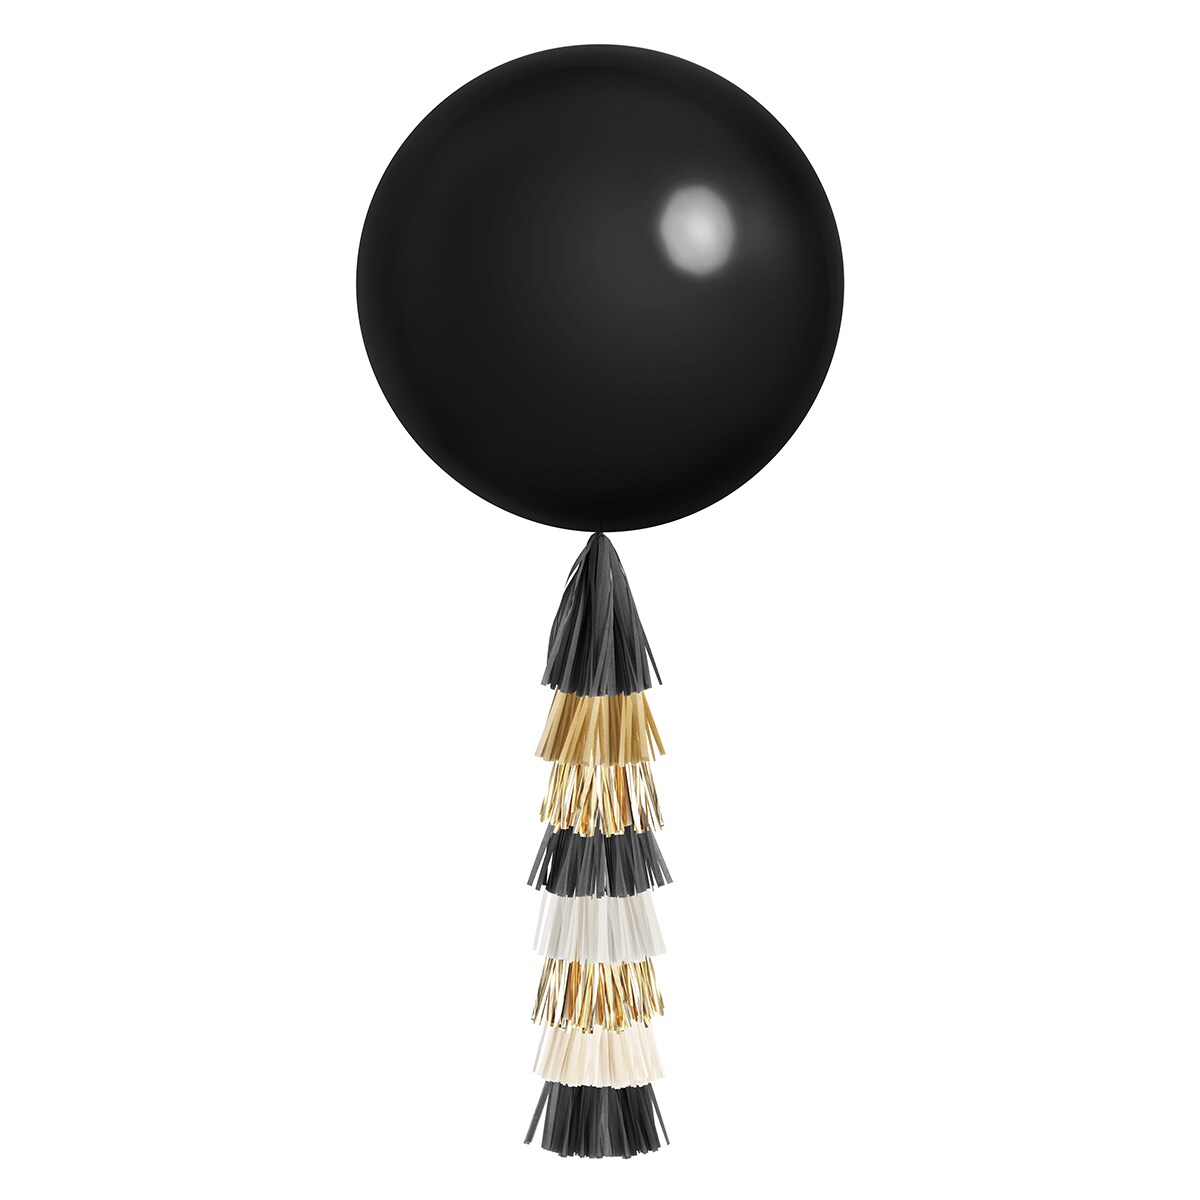 Jumbo Balloon &#x26; Tassel Tail - Black, White &#x26; Gold